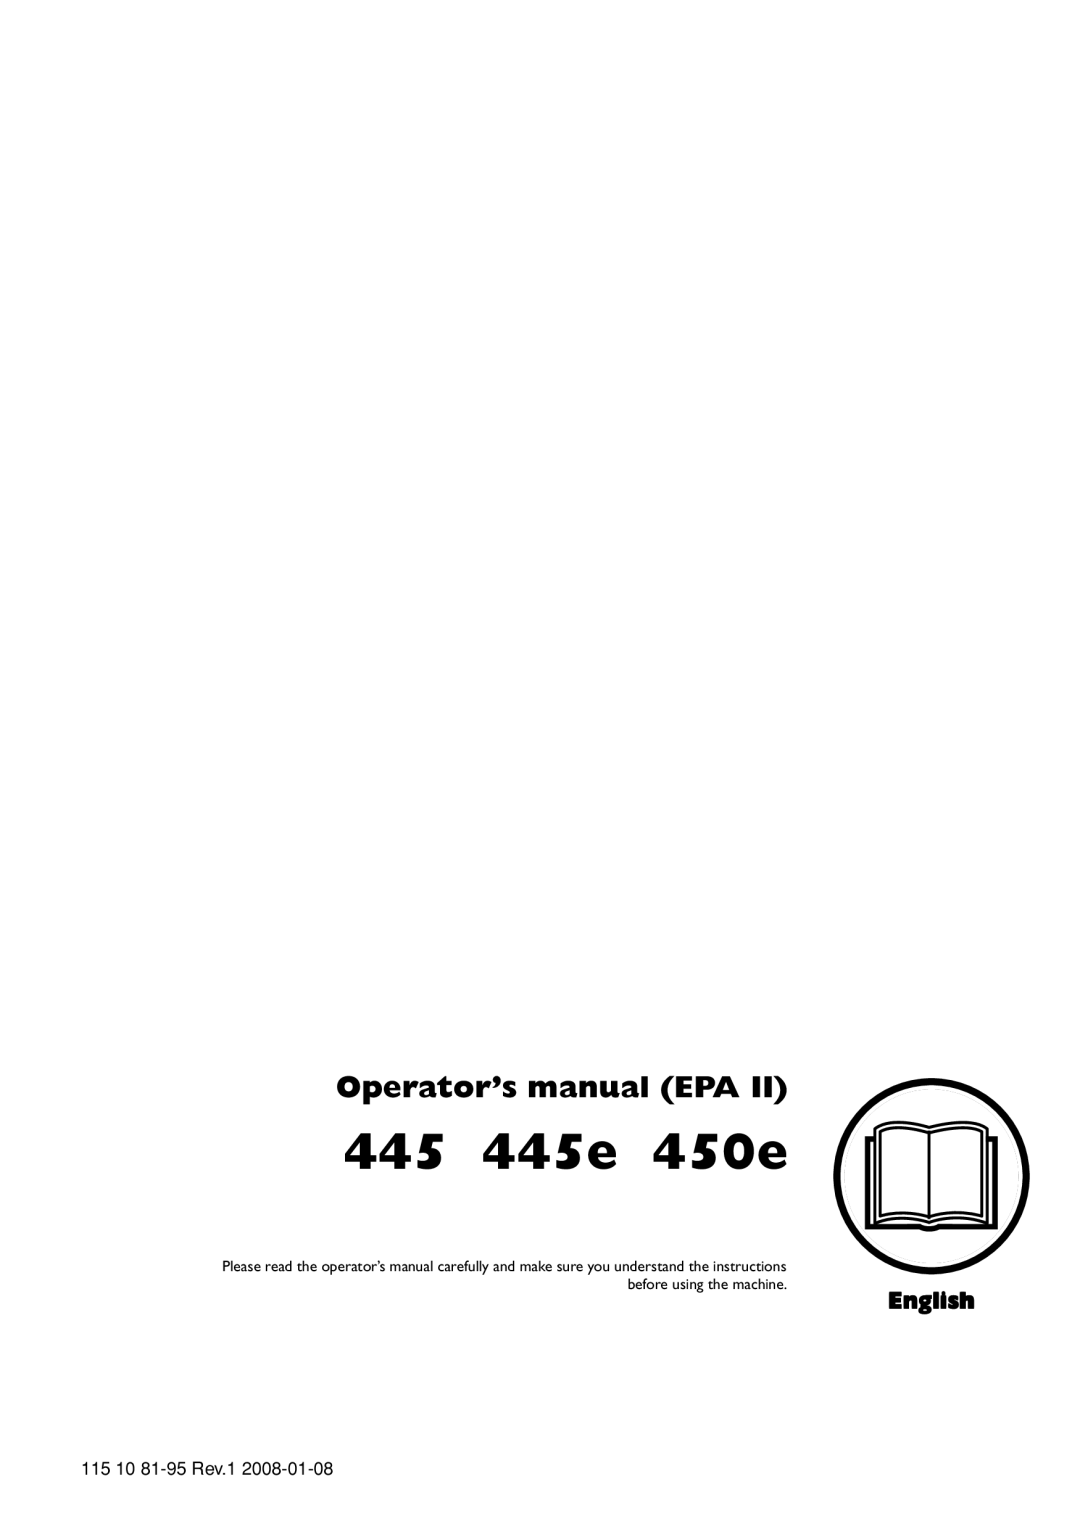 Husqvarna 440e, 435e manual 445 445e 450e, Operator’s manual EPA, English 